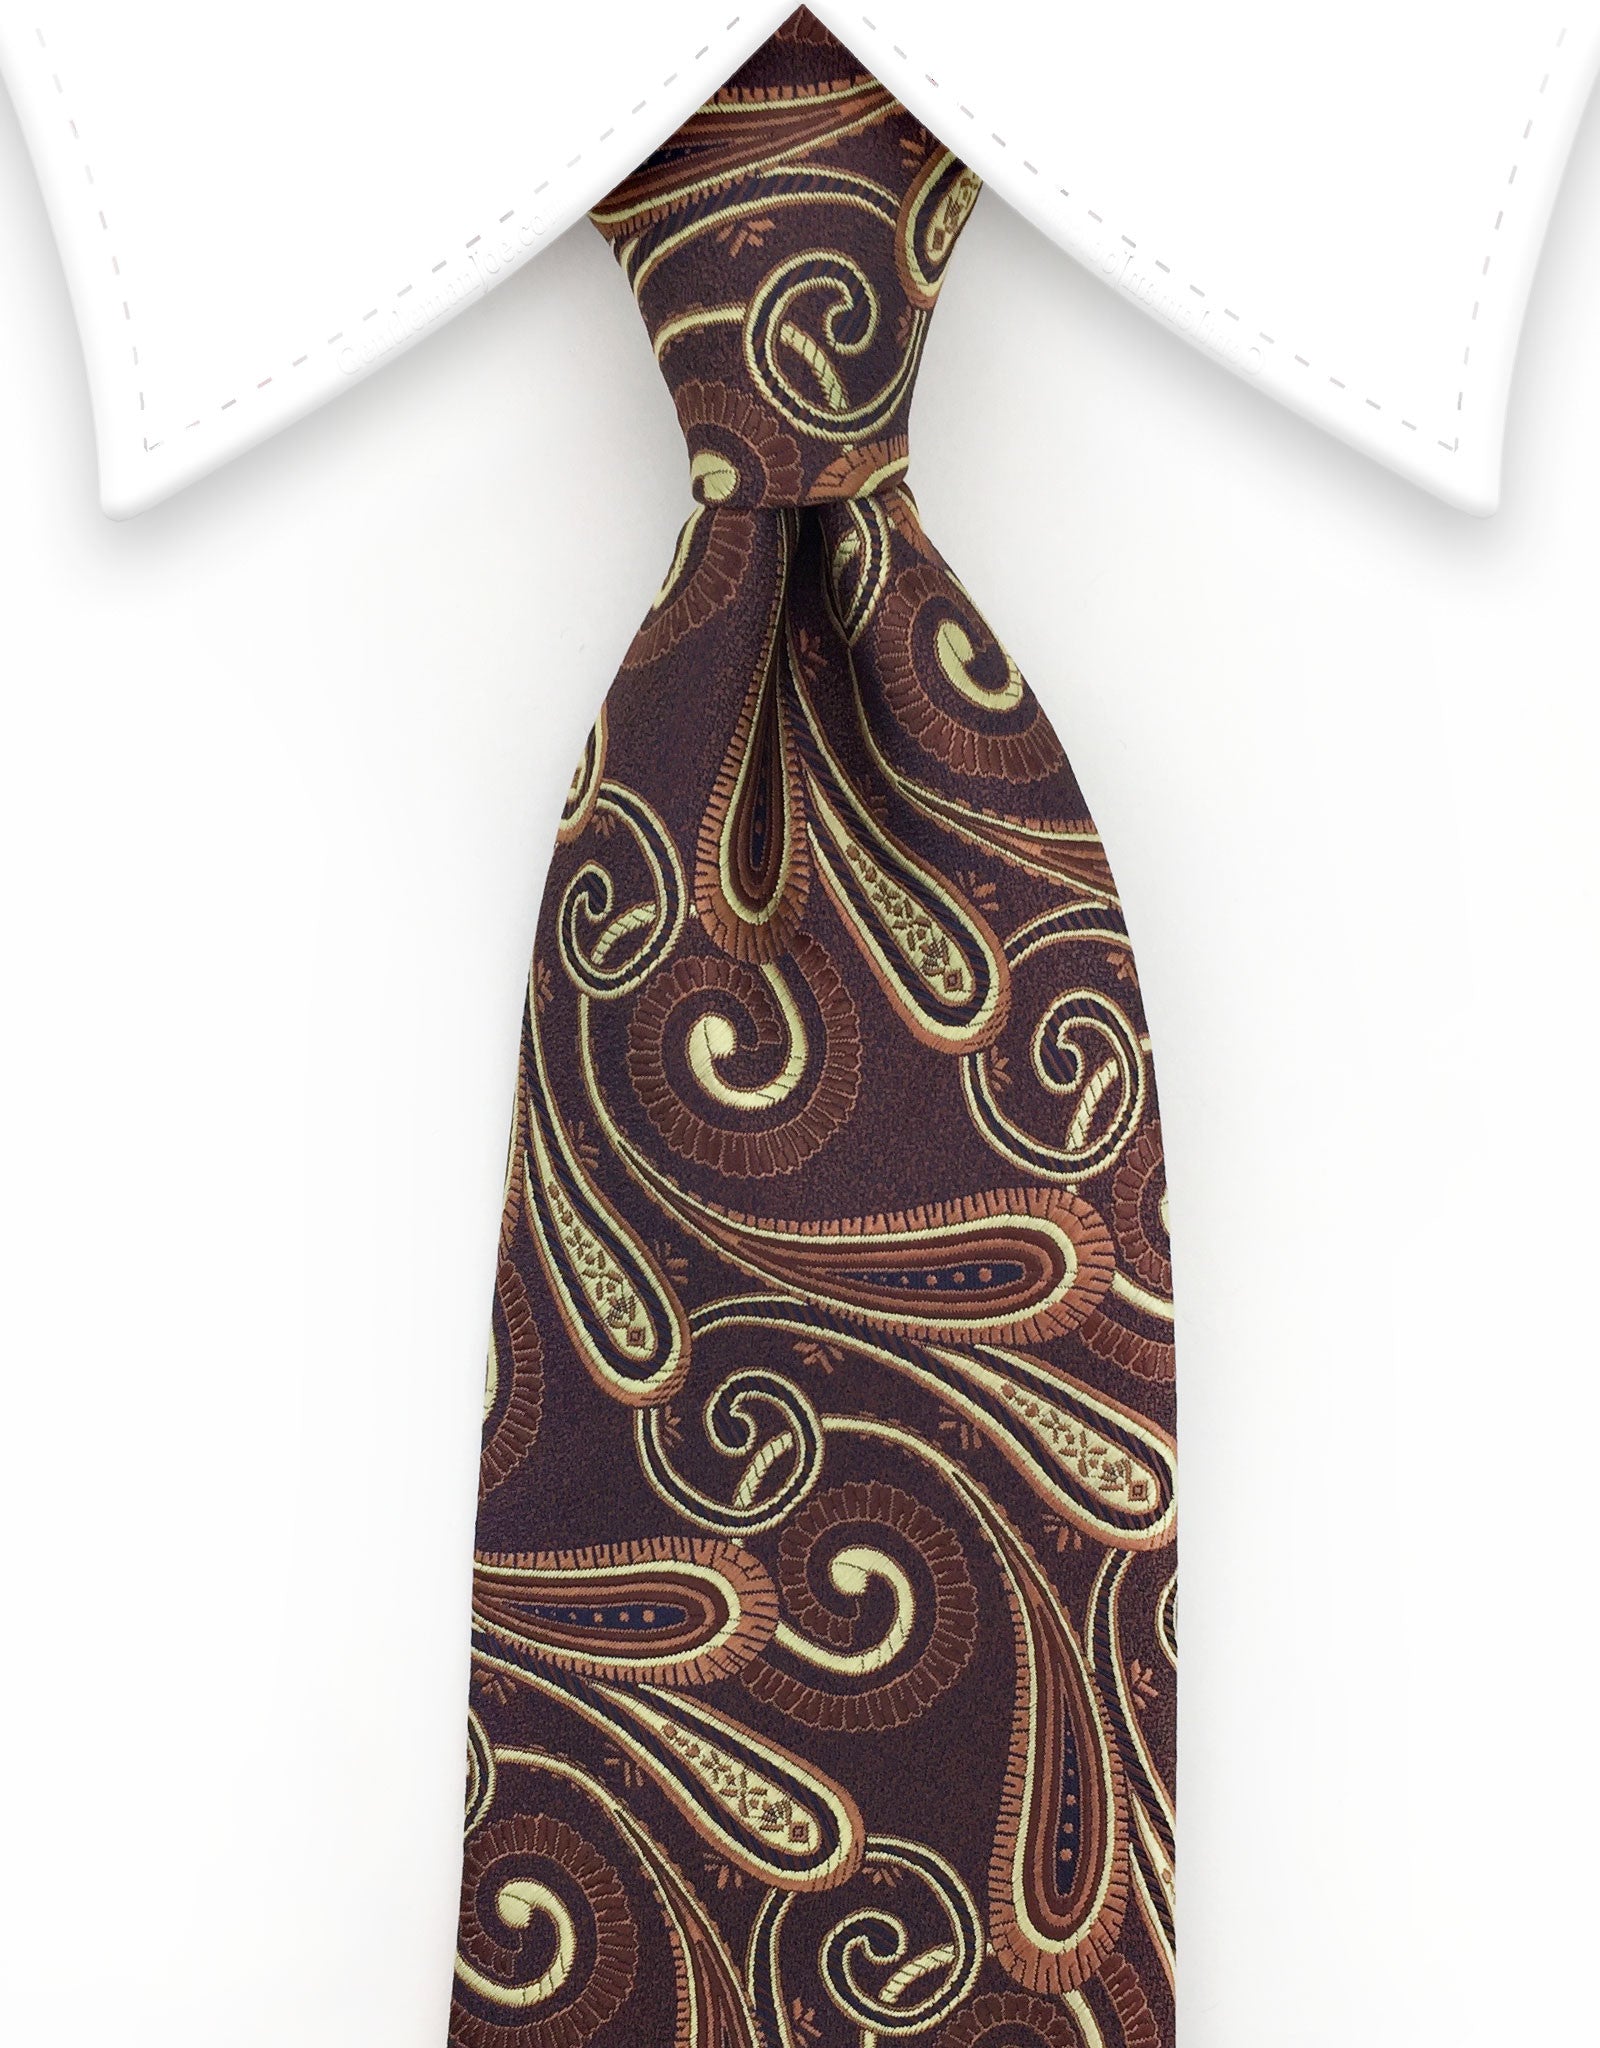 Chestnut brown paisley tie